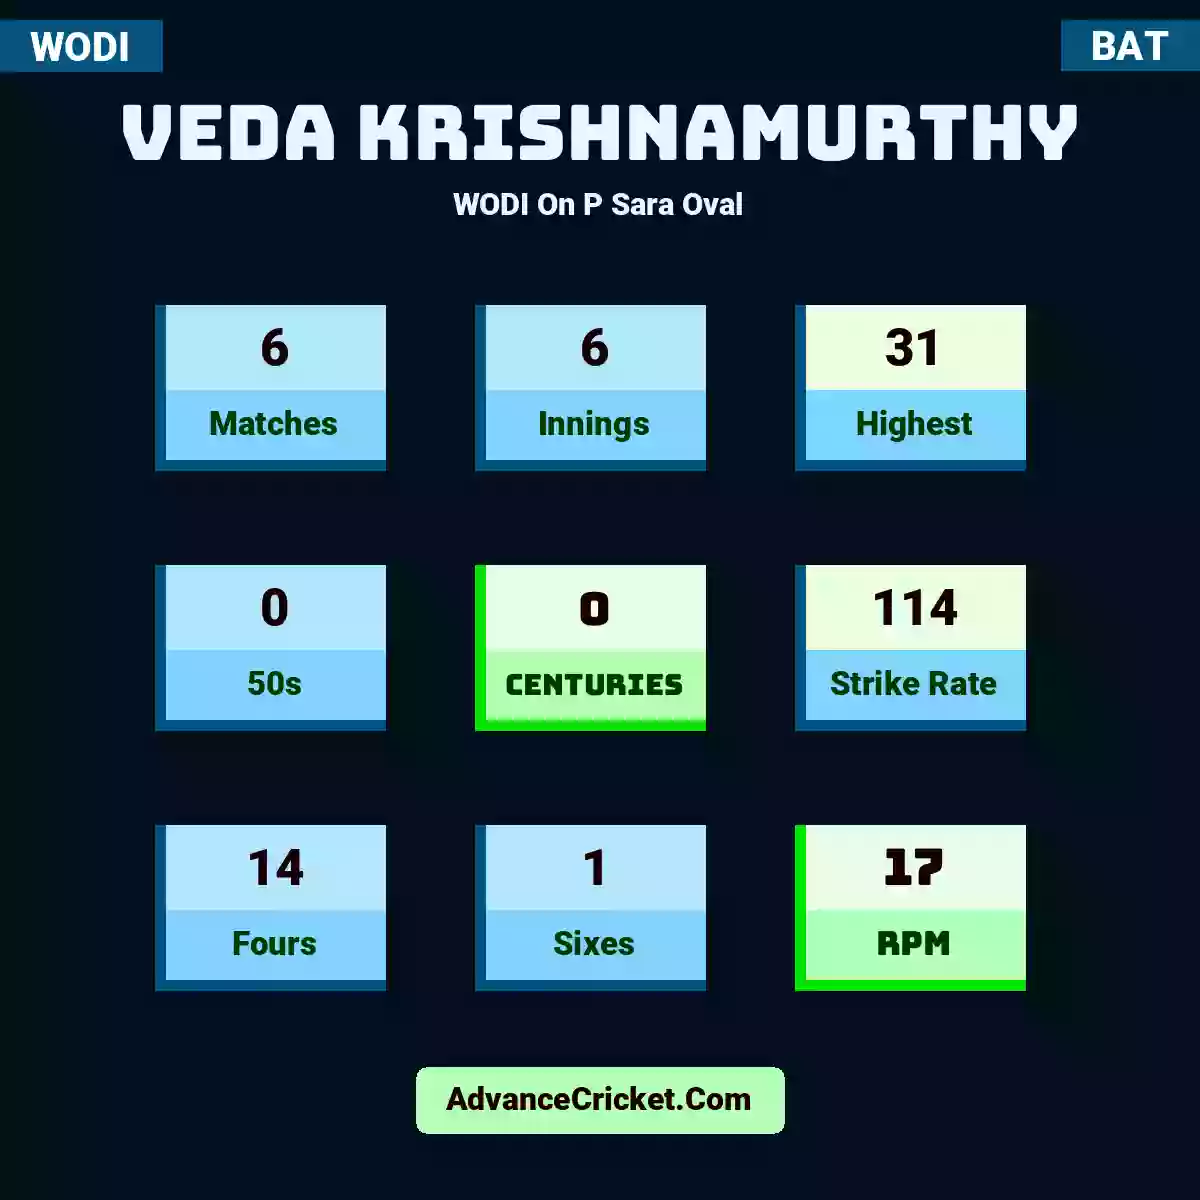 Veda Krishnamurthy WODI  On P Sara Oval, Veda Krishnamurthy played 6 matches, scored 31 runs as highest, 0 half-centuries, and 0 centuries, with a strike rate of 114. V.Krishnamurthy hit 14 fours and 1 sixes, with an RPM of 17.